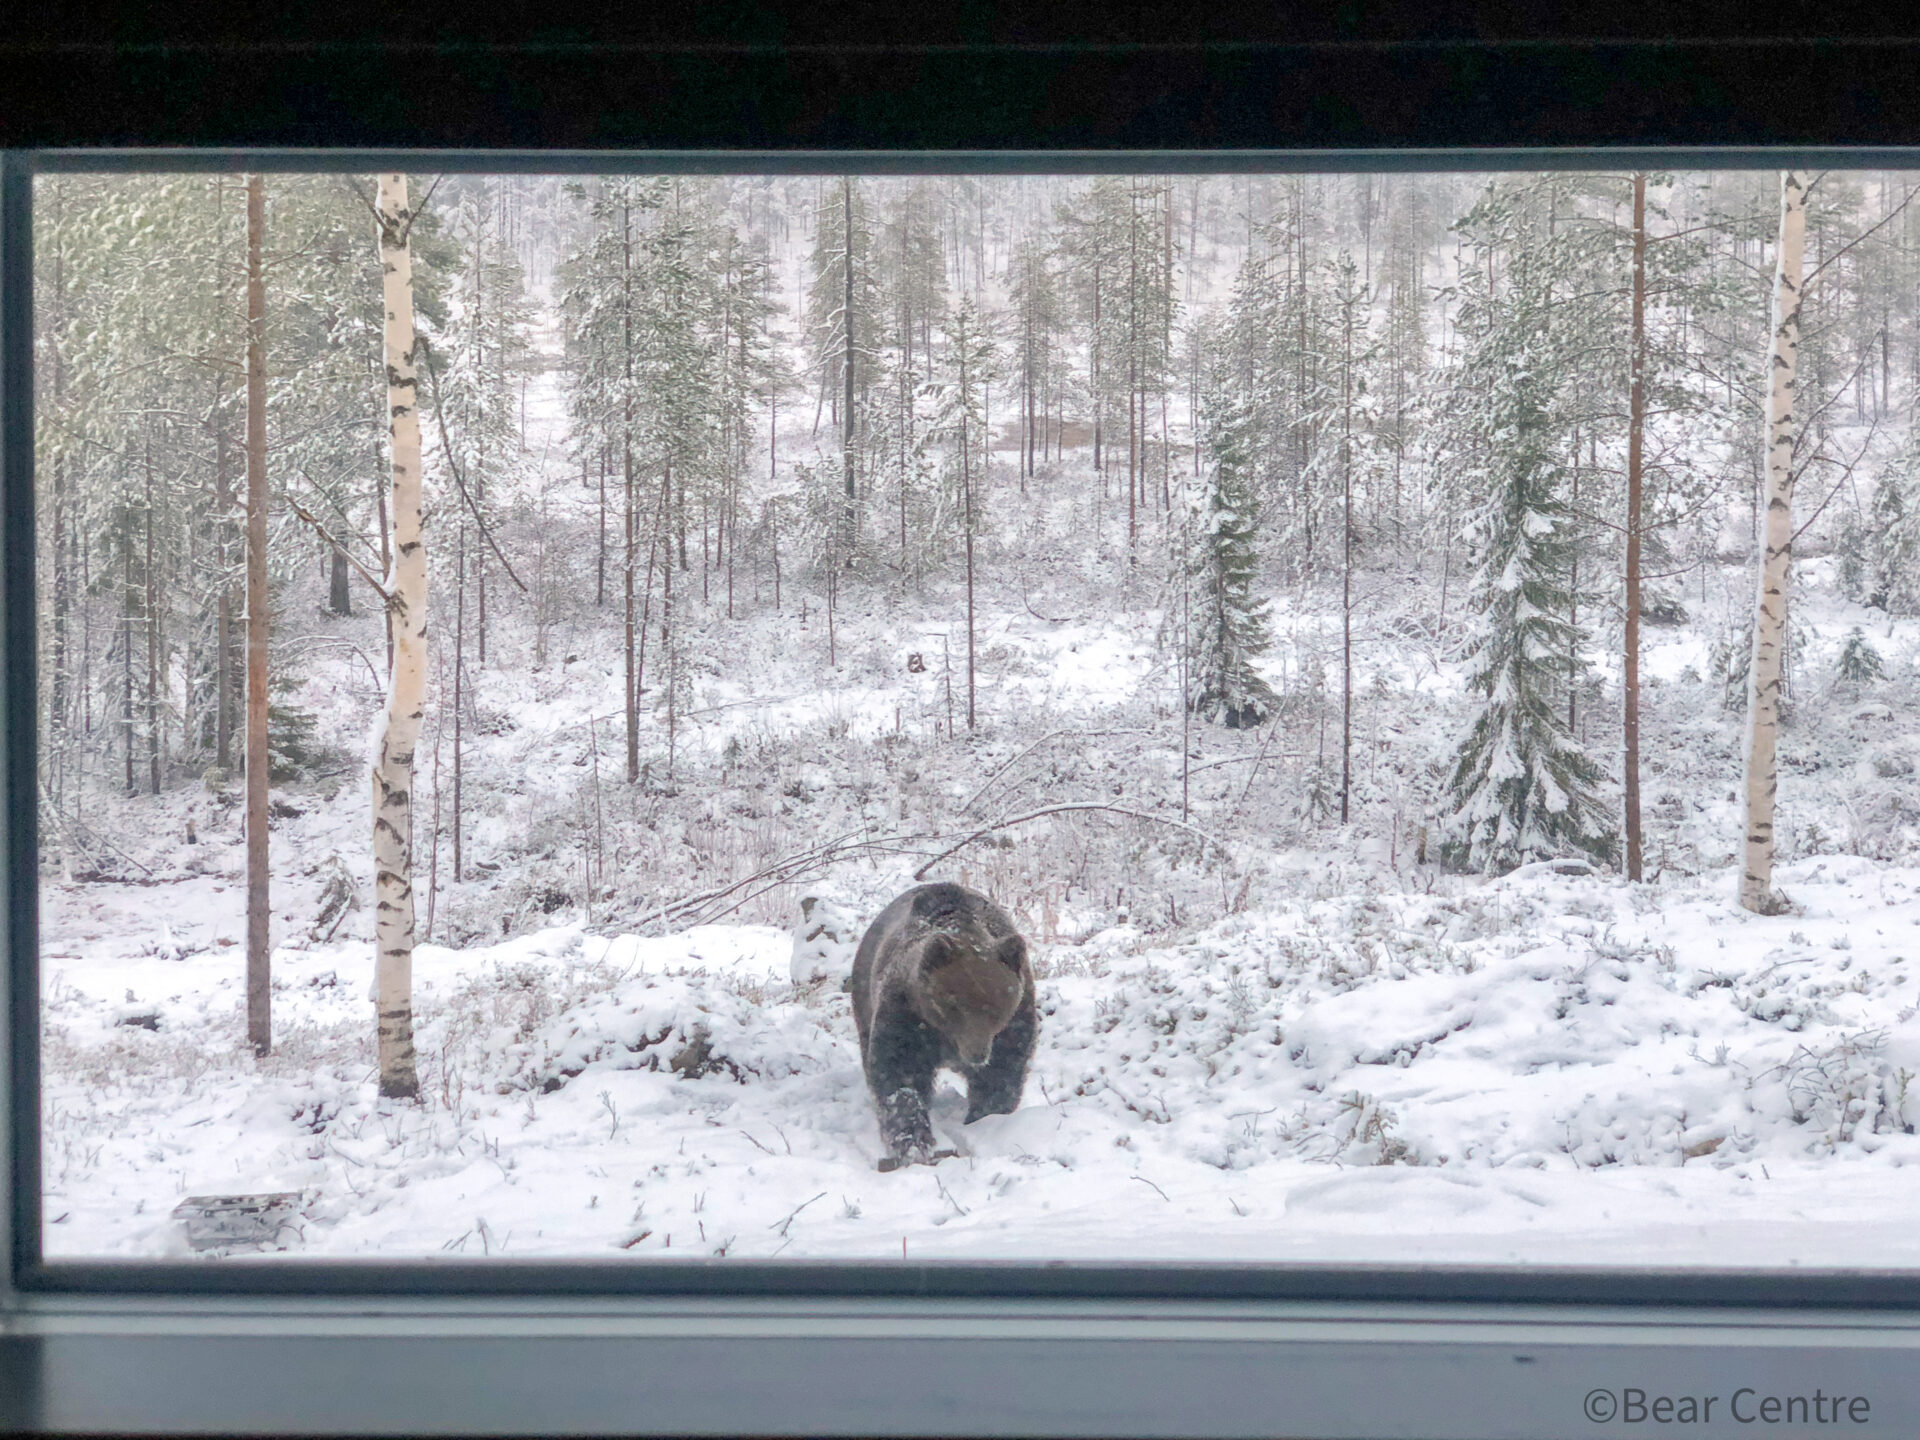 Bear Watching Night at Martinselkonen | Visit Finland